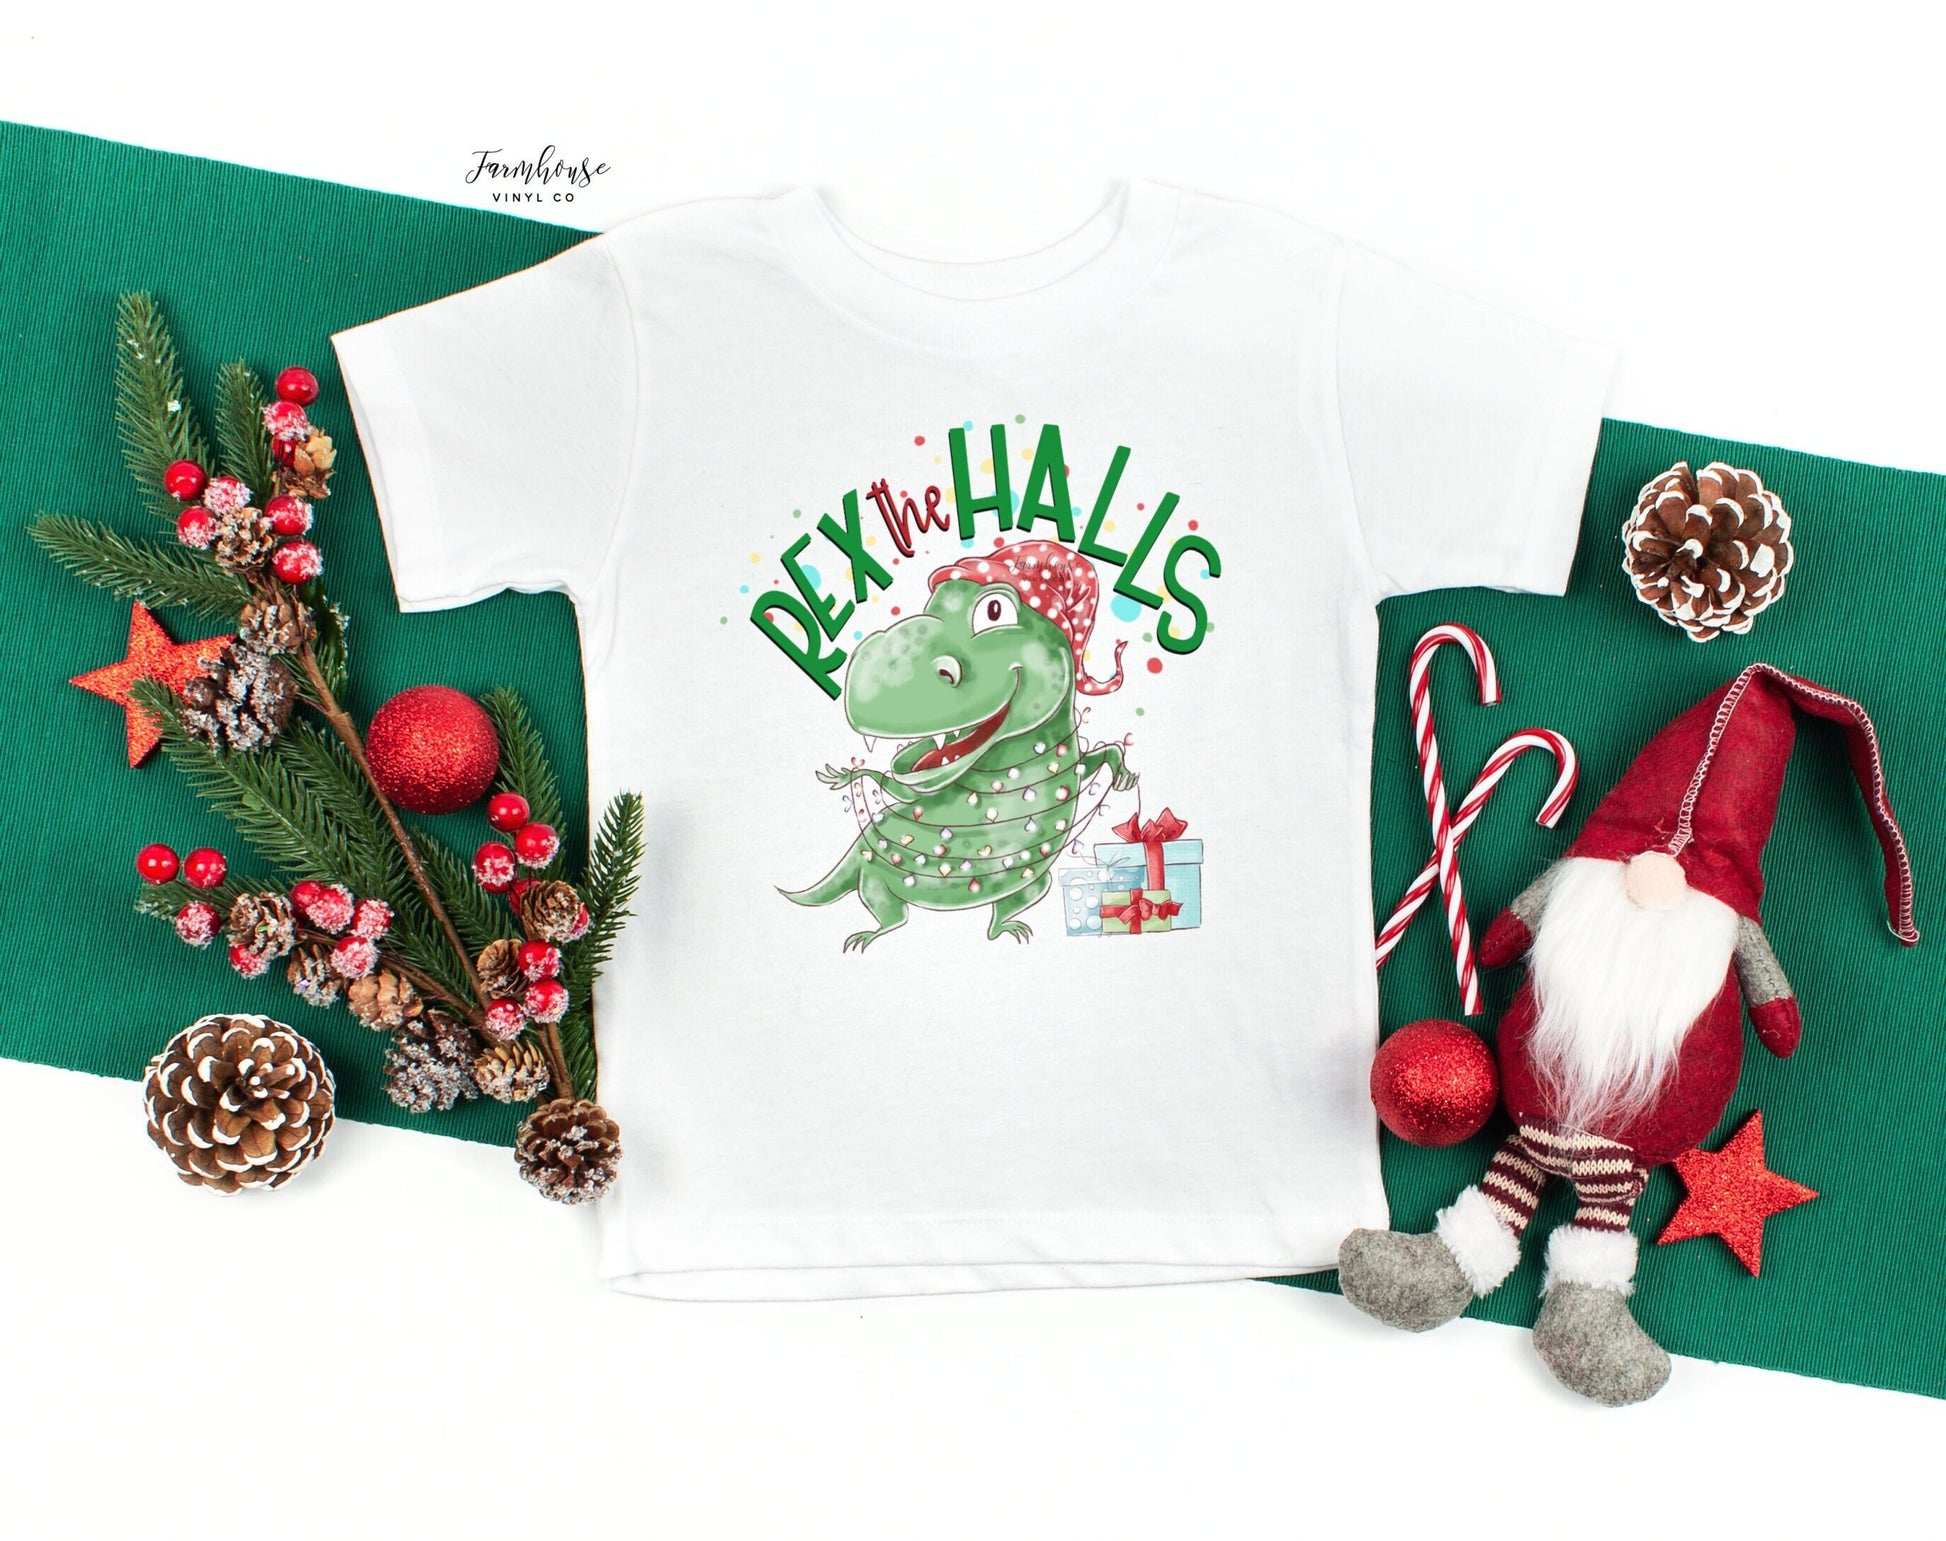 Dinosaur Christmas Shirts / Youth Dinosaur Tee / Rex the Halls Shirt / Group Matching Christmas Shirts / T-Rex Shirt / Adult Youth Toodler T - Farmhouse Vinyl Co